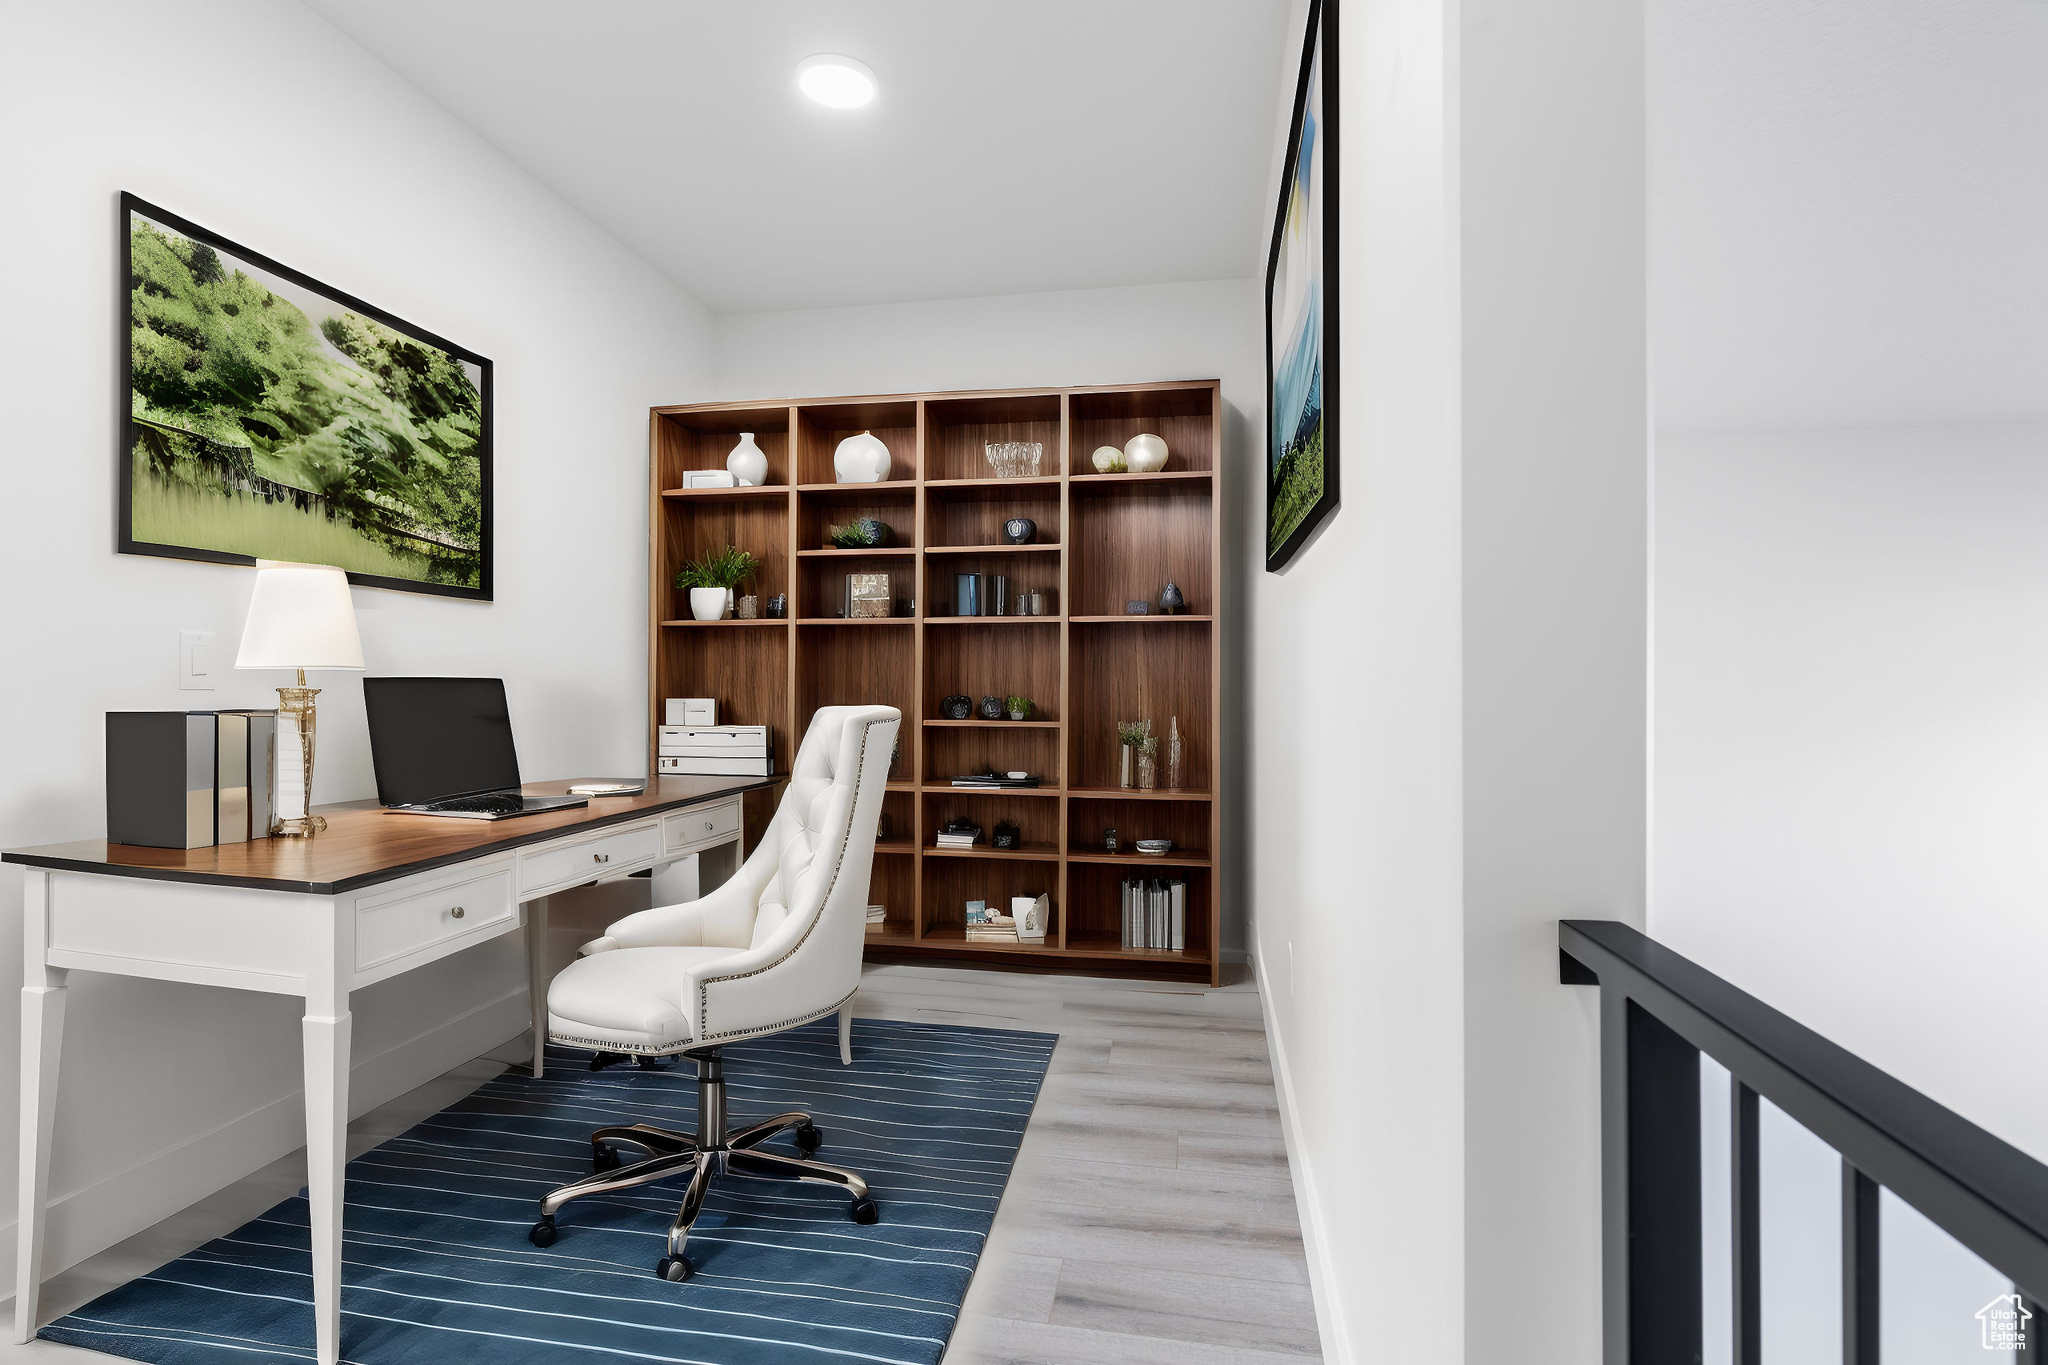 Office area featuring light hardwood / wood-style floors